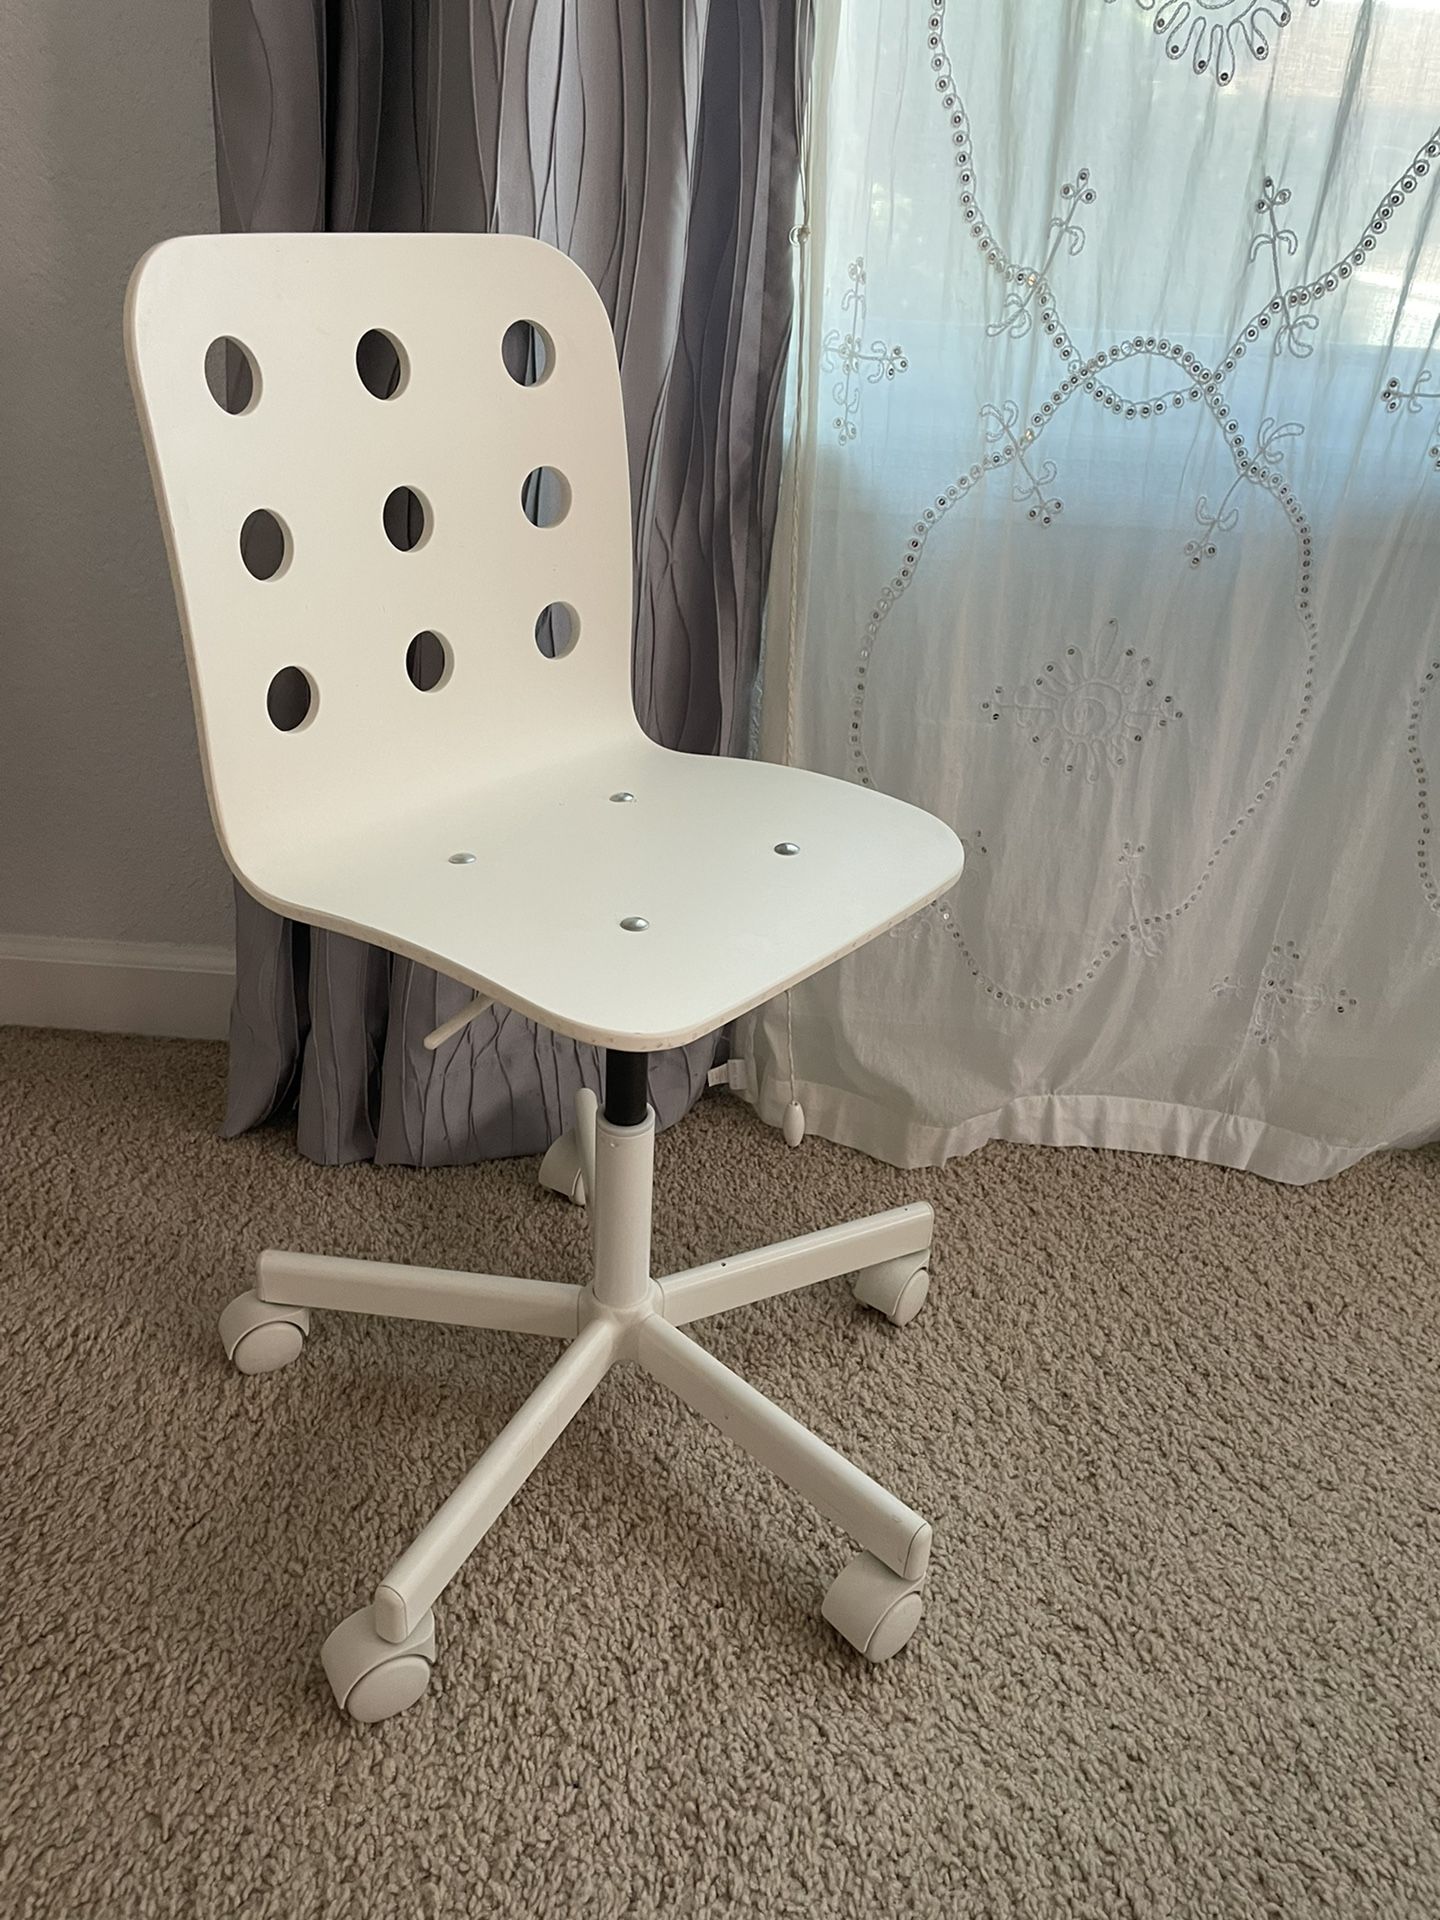 White Ikea Child’s Desk Chair